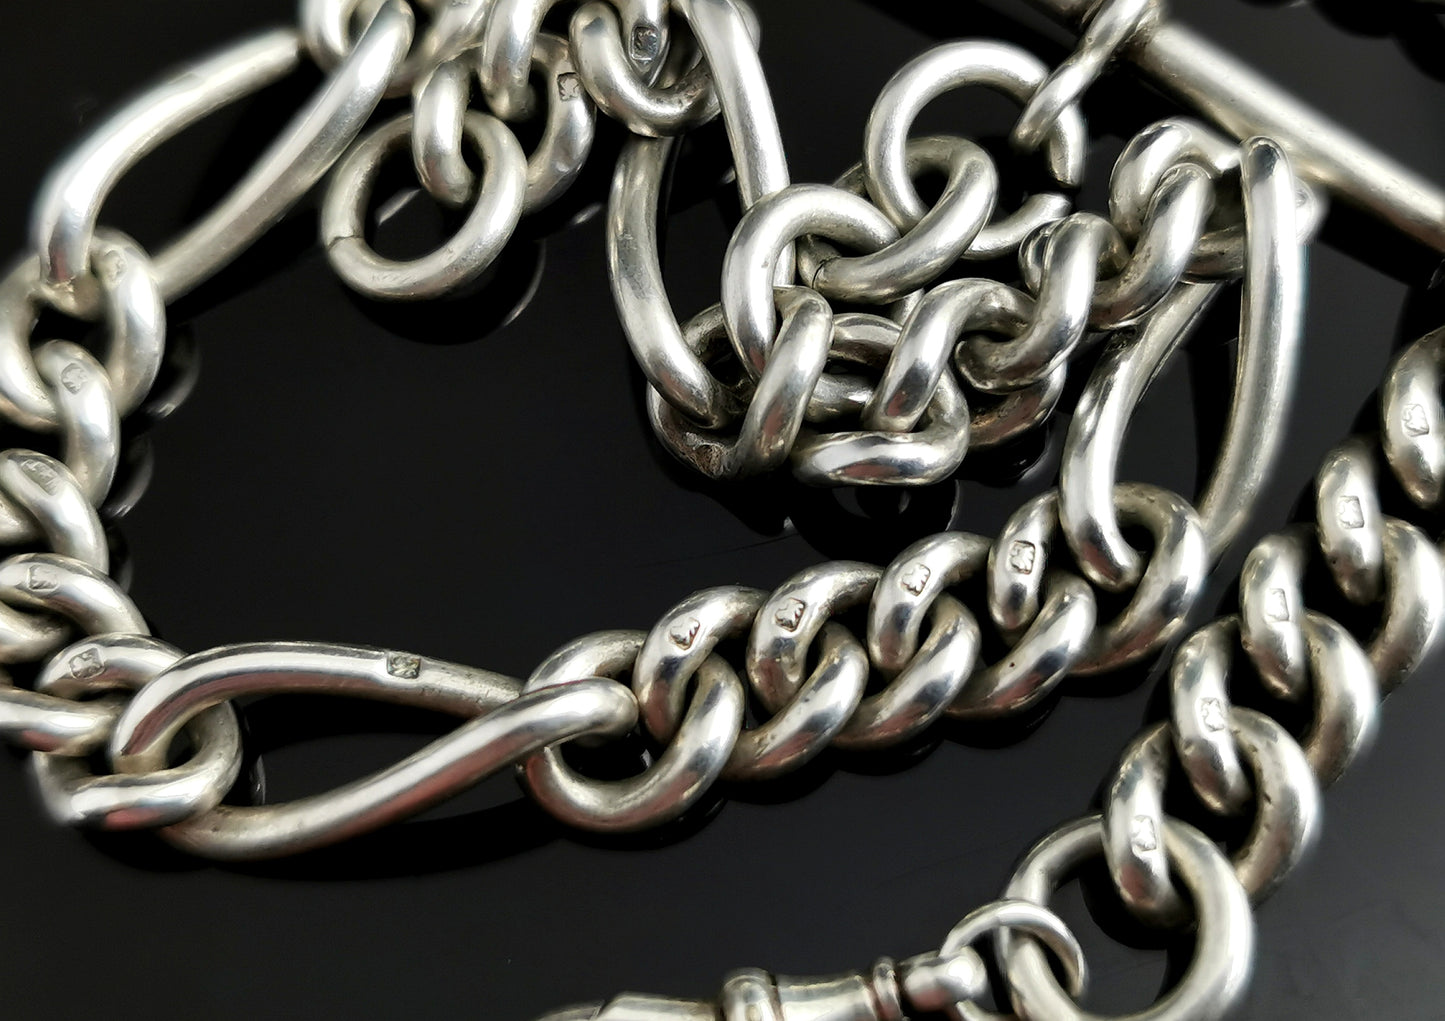 Antique Victorian silver Albert chain, Fetter link, watch chain